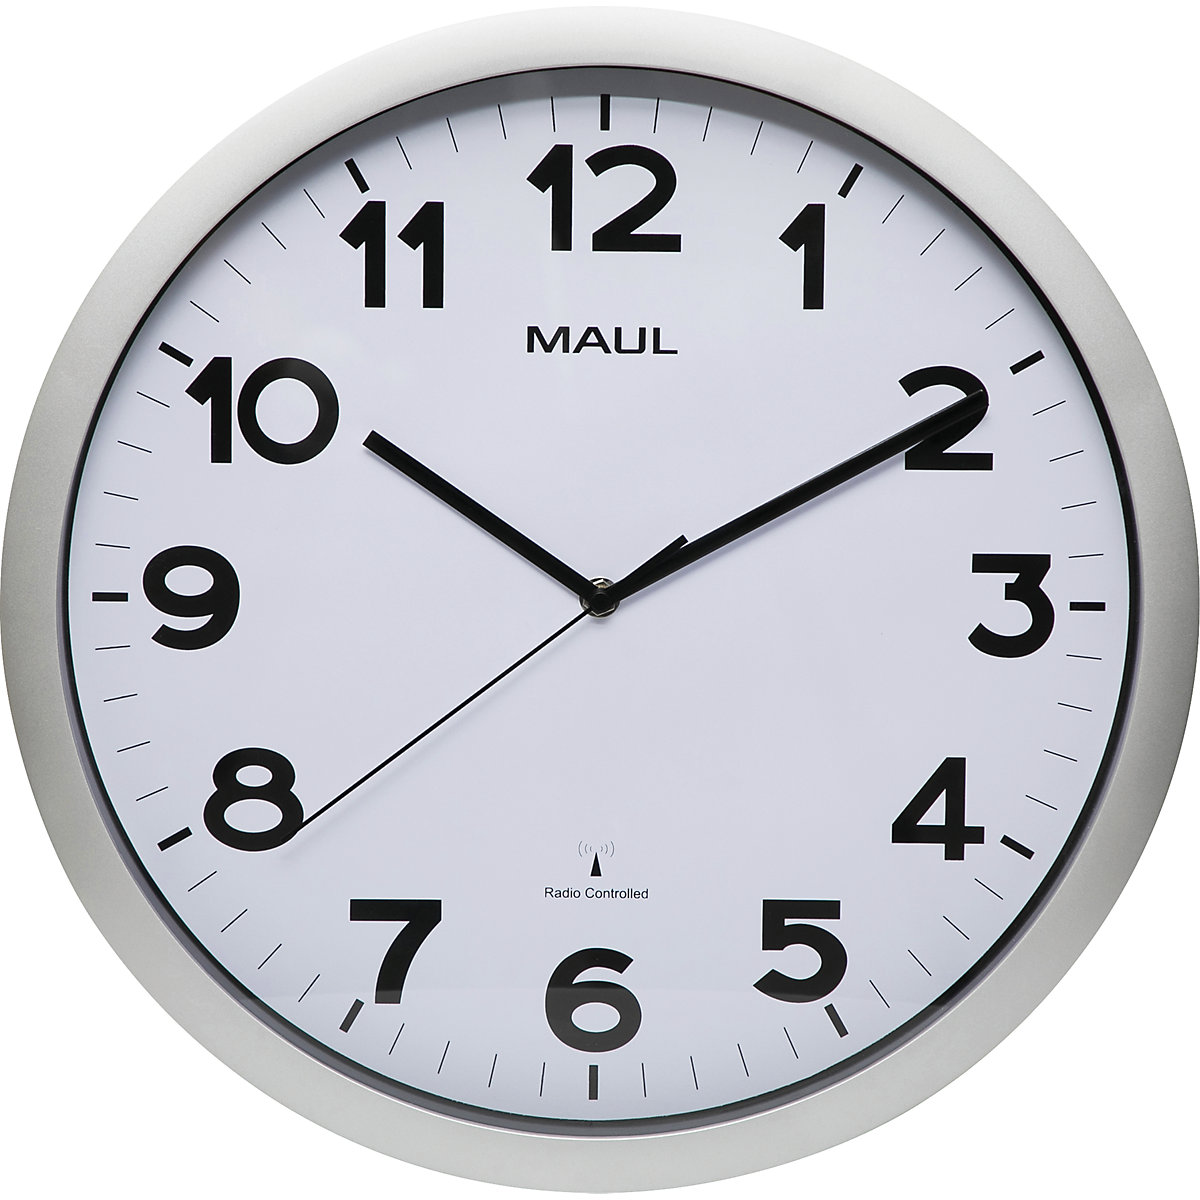 MAULstep wall clock – MAUL